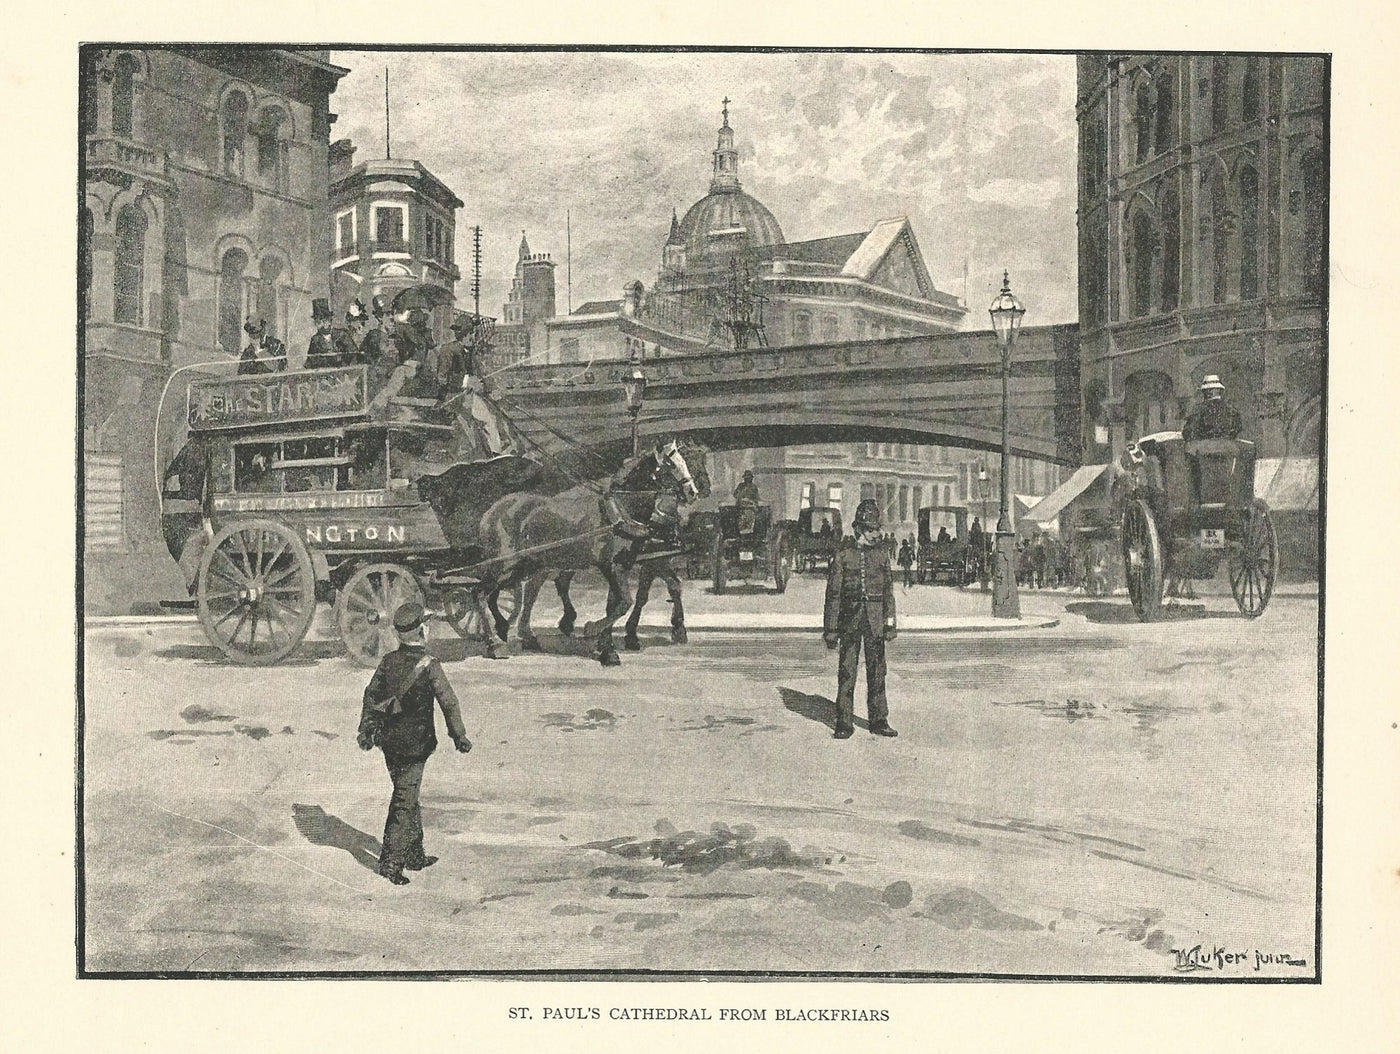 Railway Prints